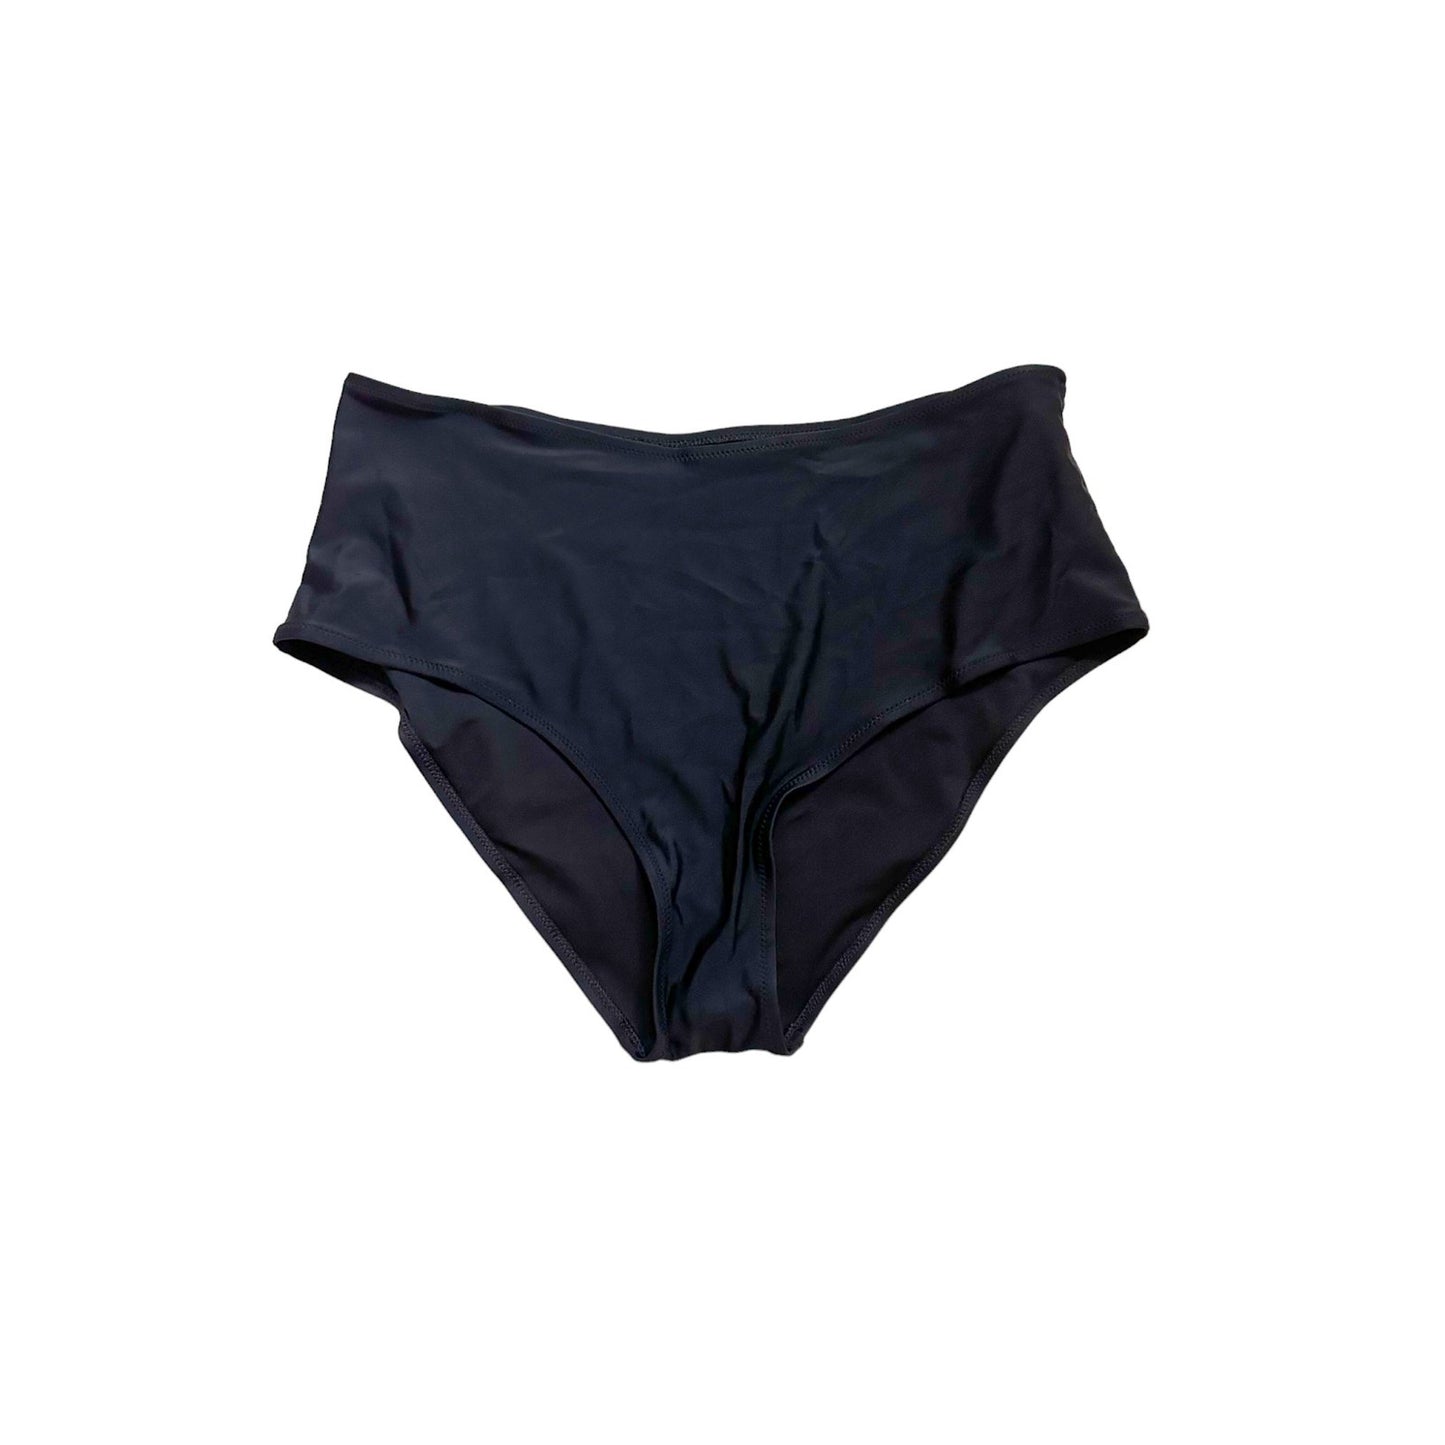 NWT Aerie Bikini Bottom, Size L